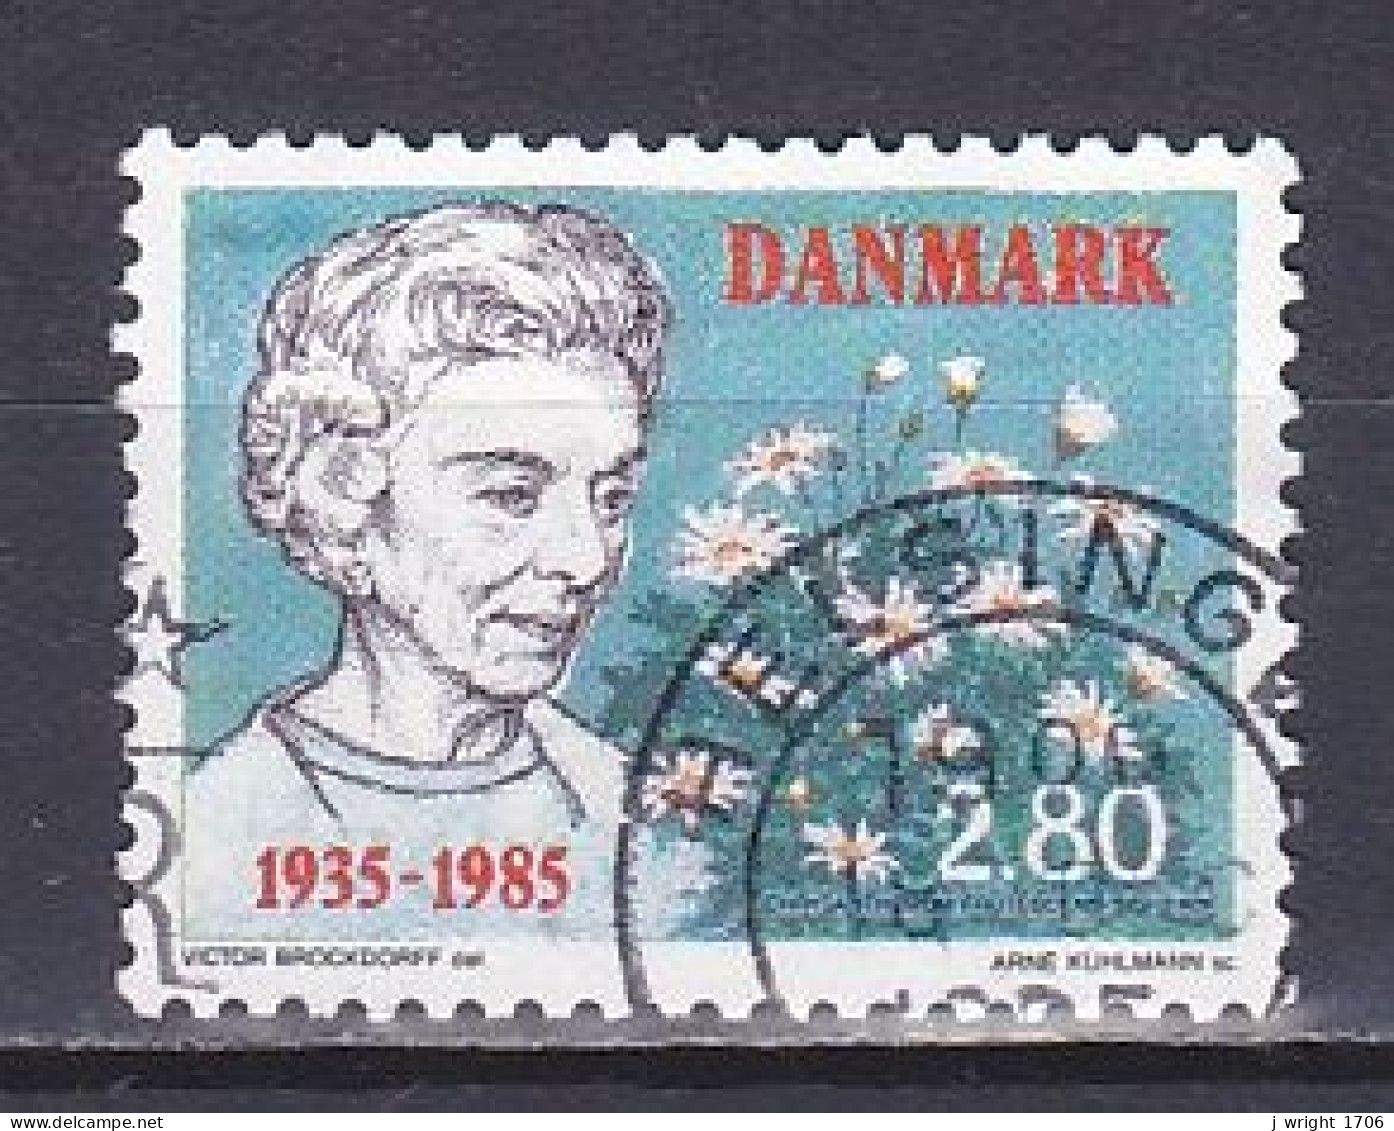 Denmark, 1985, Queen Ingrid Arrival 50th Anniv, 2.80kr, USED - Oblitérés